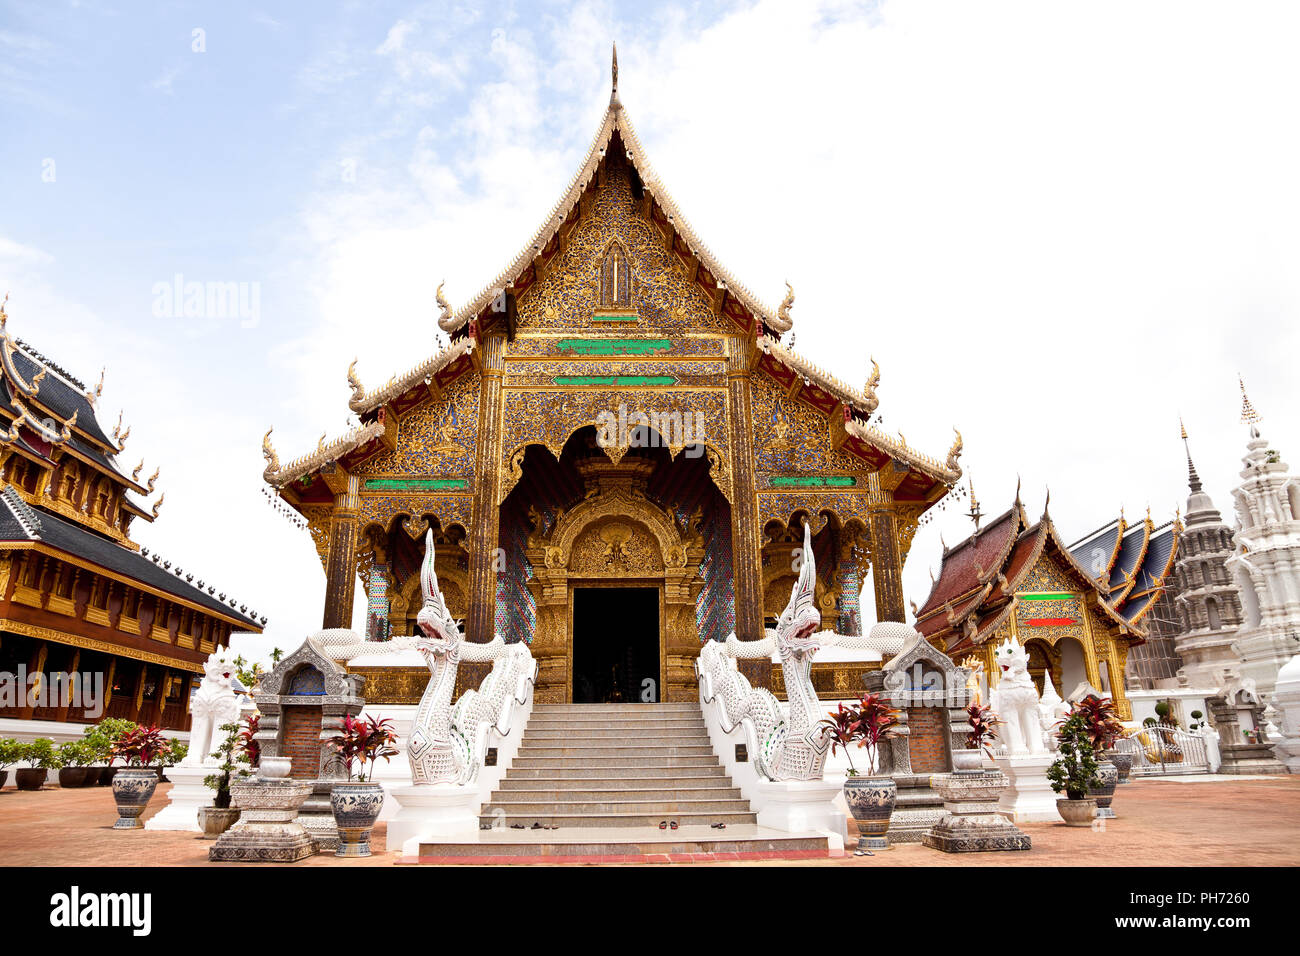 Stile Lanna tempio buddista in Thailandia Foto Stock